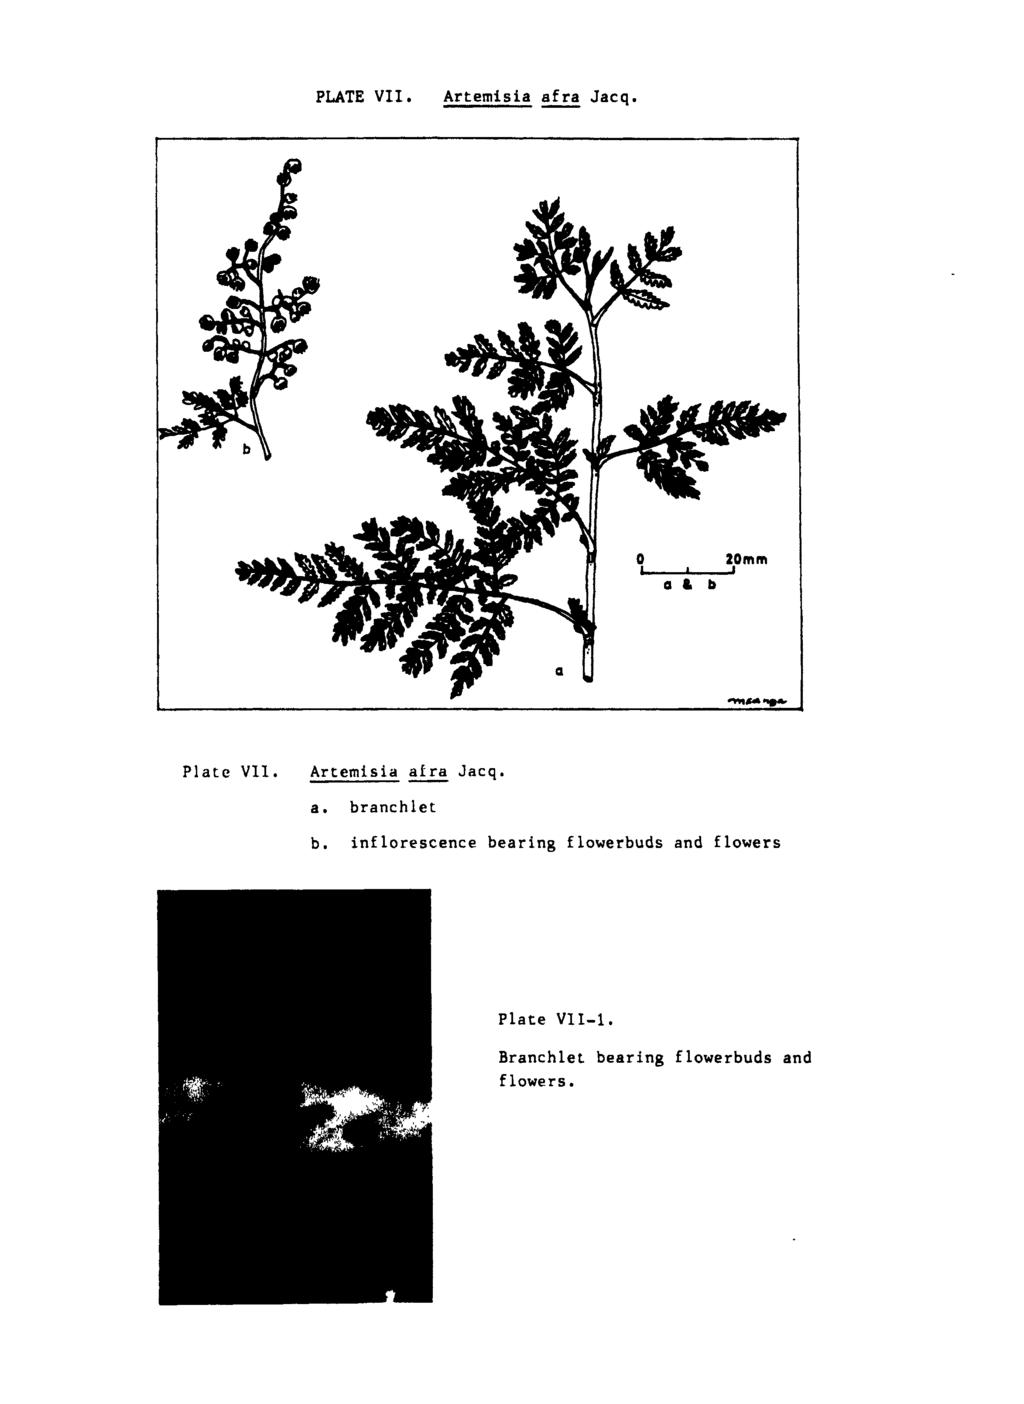 PLATE VII. Artemisia afra Jacq. o, I, a & b 20mm Plate VII. Artemisia aira Jacq. a. branch let b.